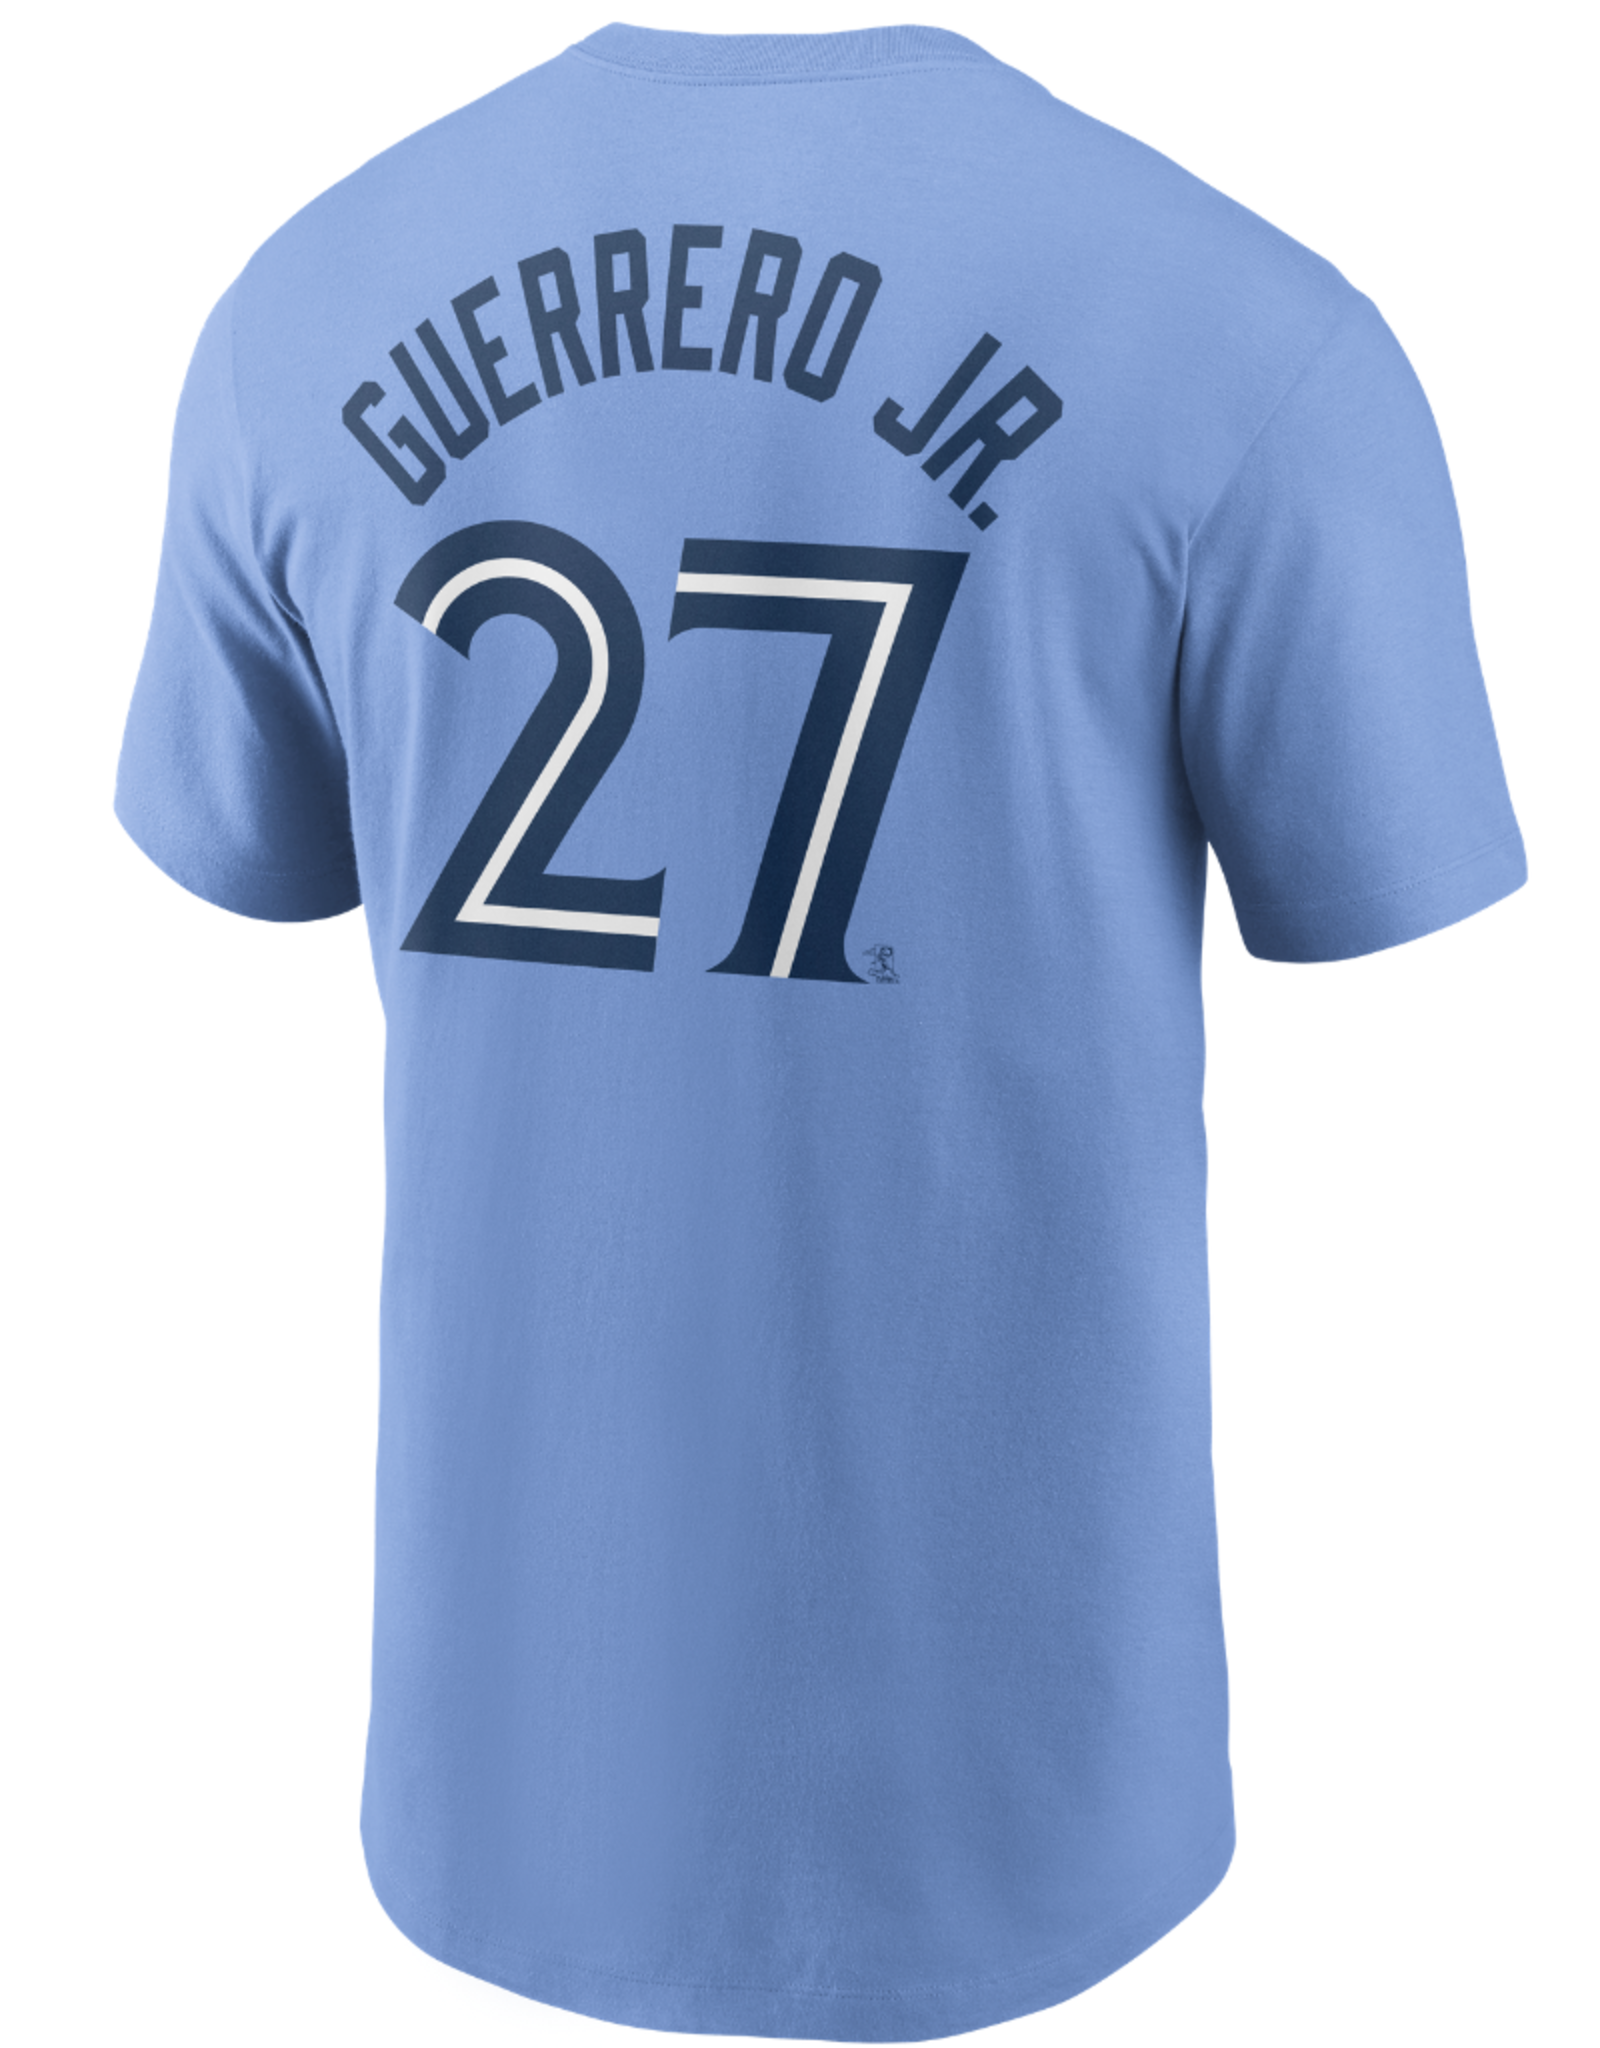 Men's Player T-Shirt Guerrero #27 Toronto Blue Jays Blue